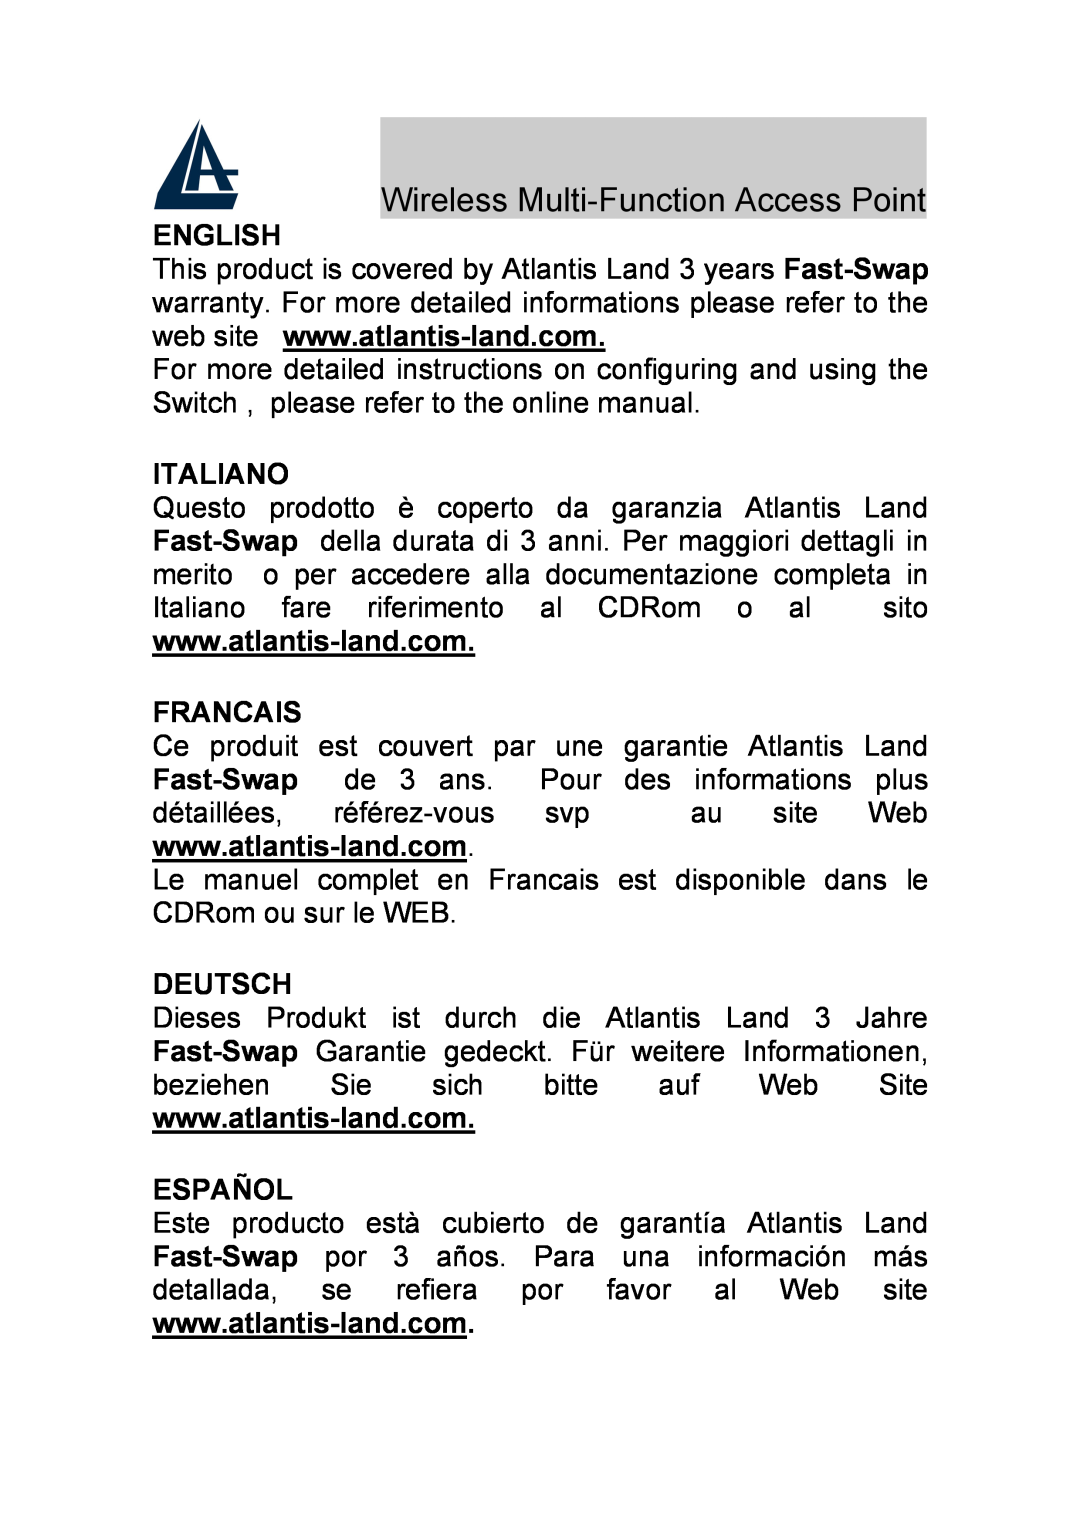 Atlantis Land A02-AP-W54_GE01 Wireless Multi-Function Access Point, English, Italiano, Francais, Deutsch, Español 